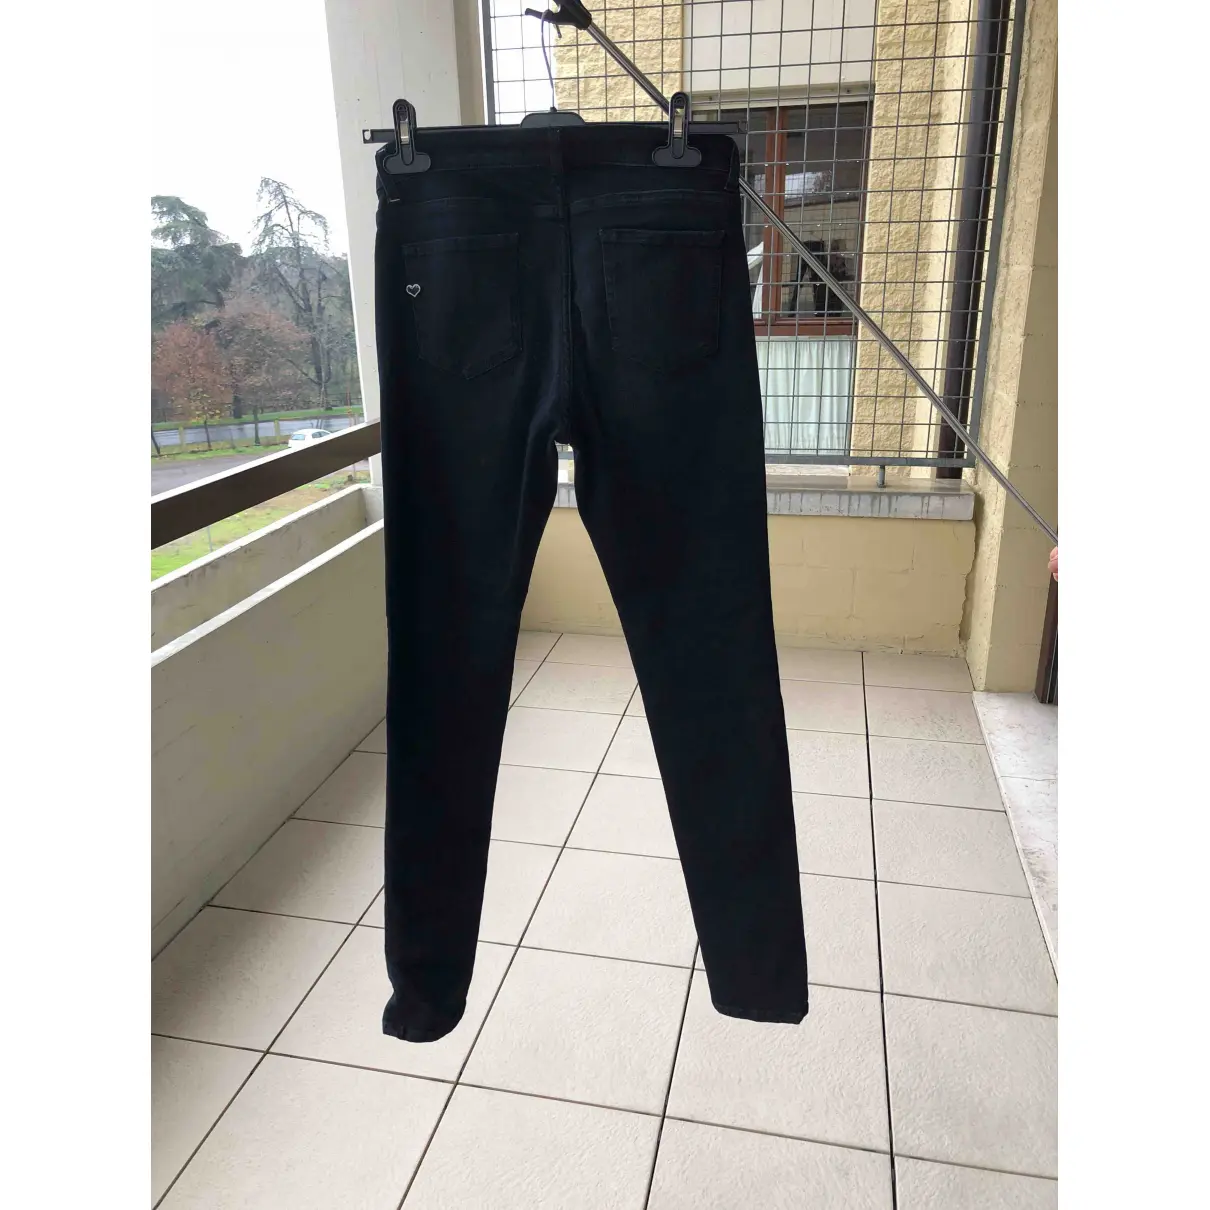 Buy Twinset Slim jeans online